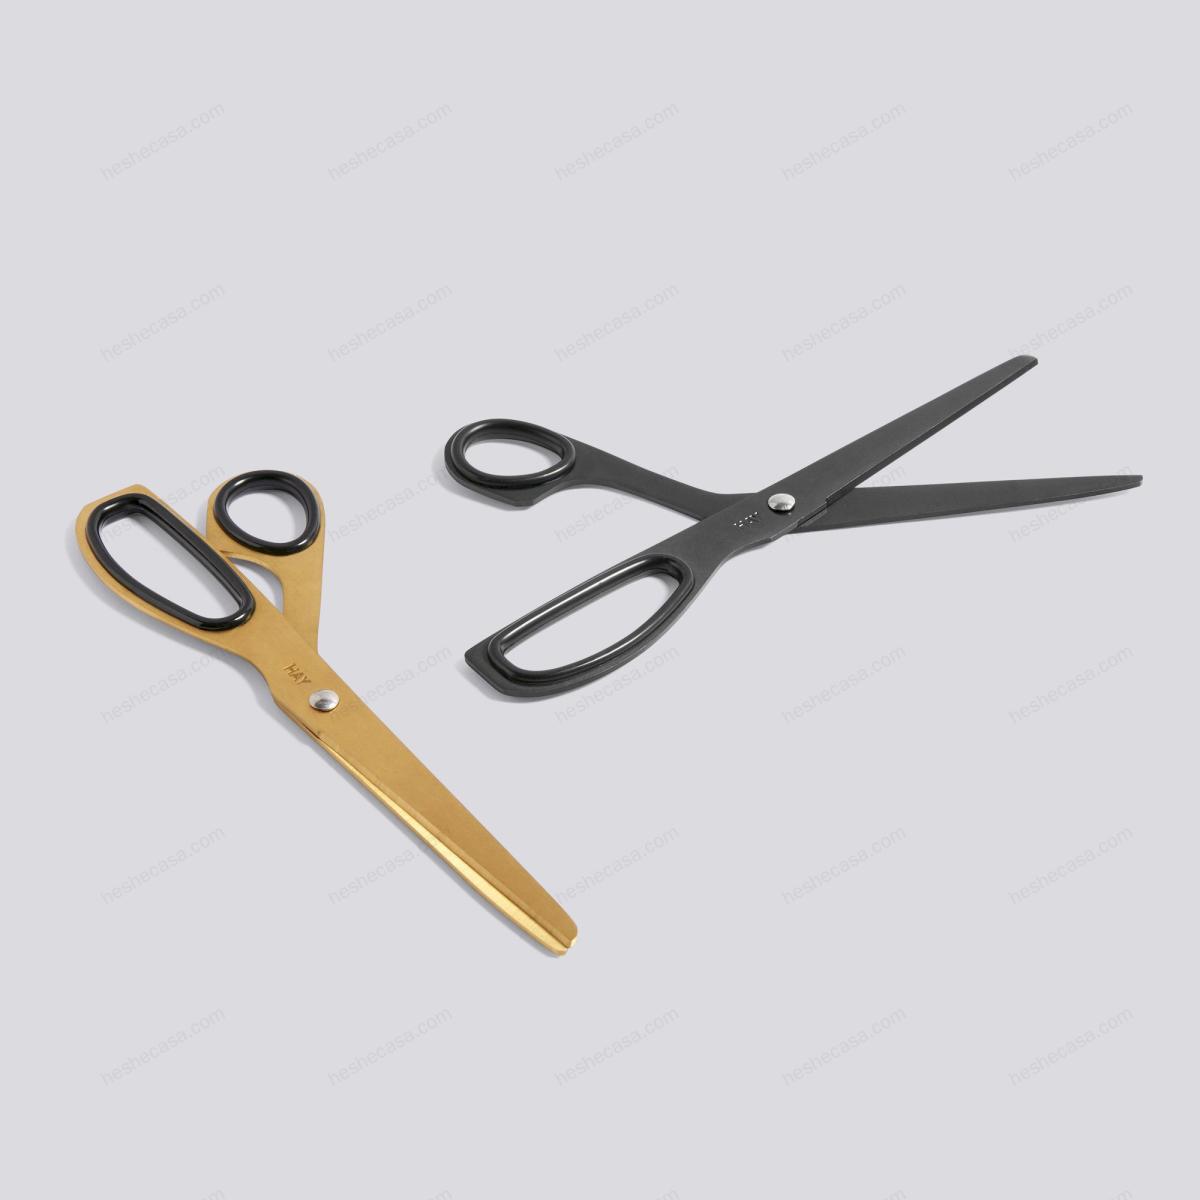 Scissors 剪刀